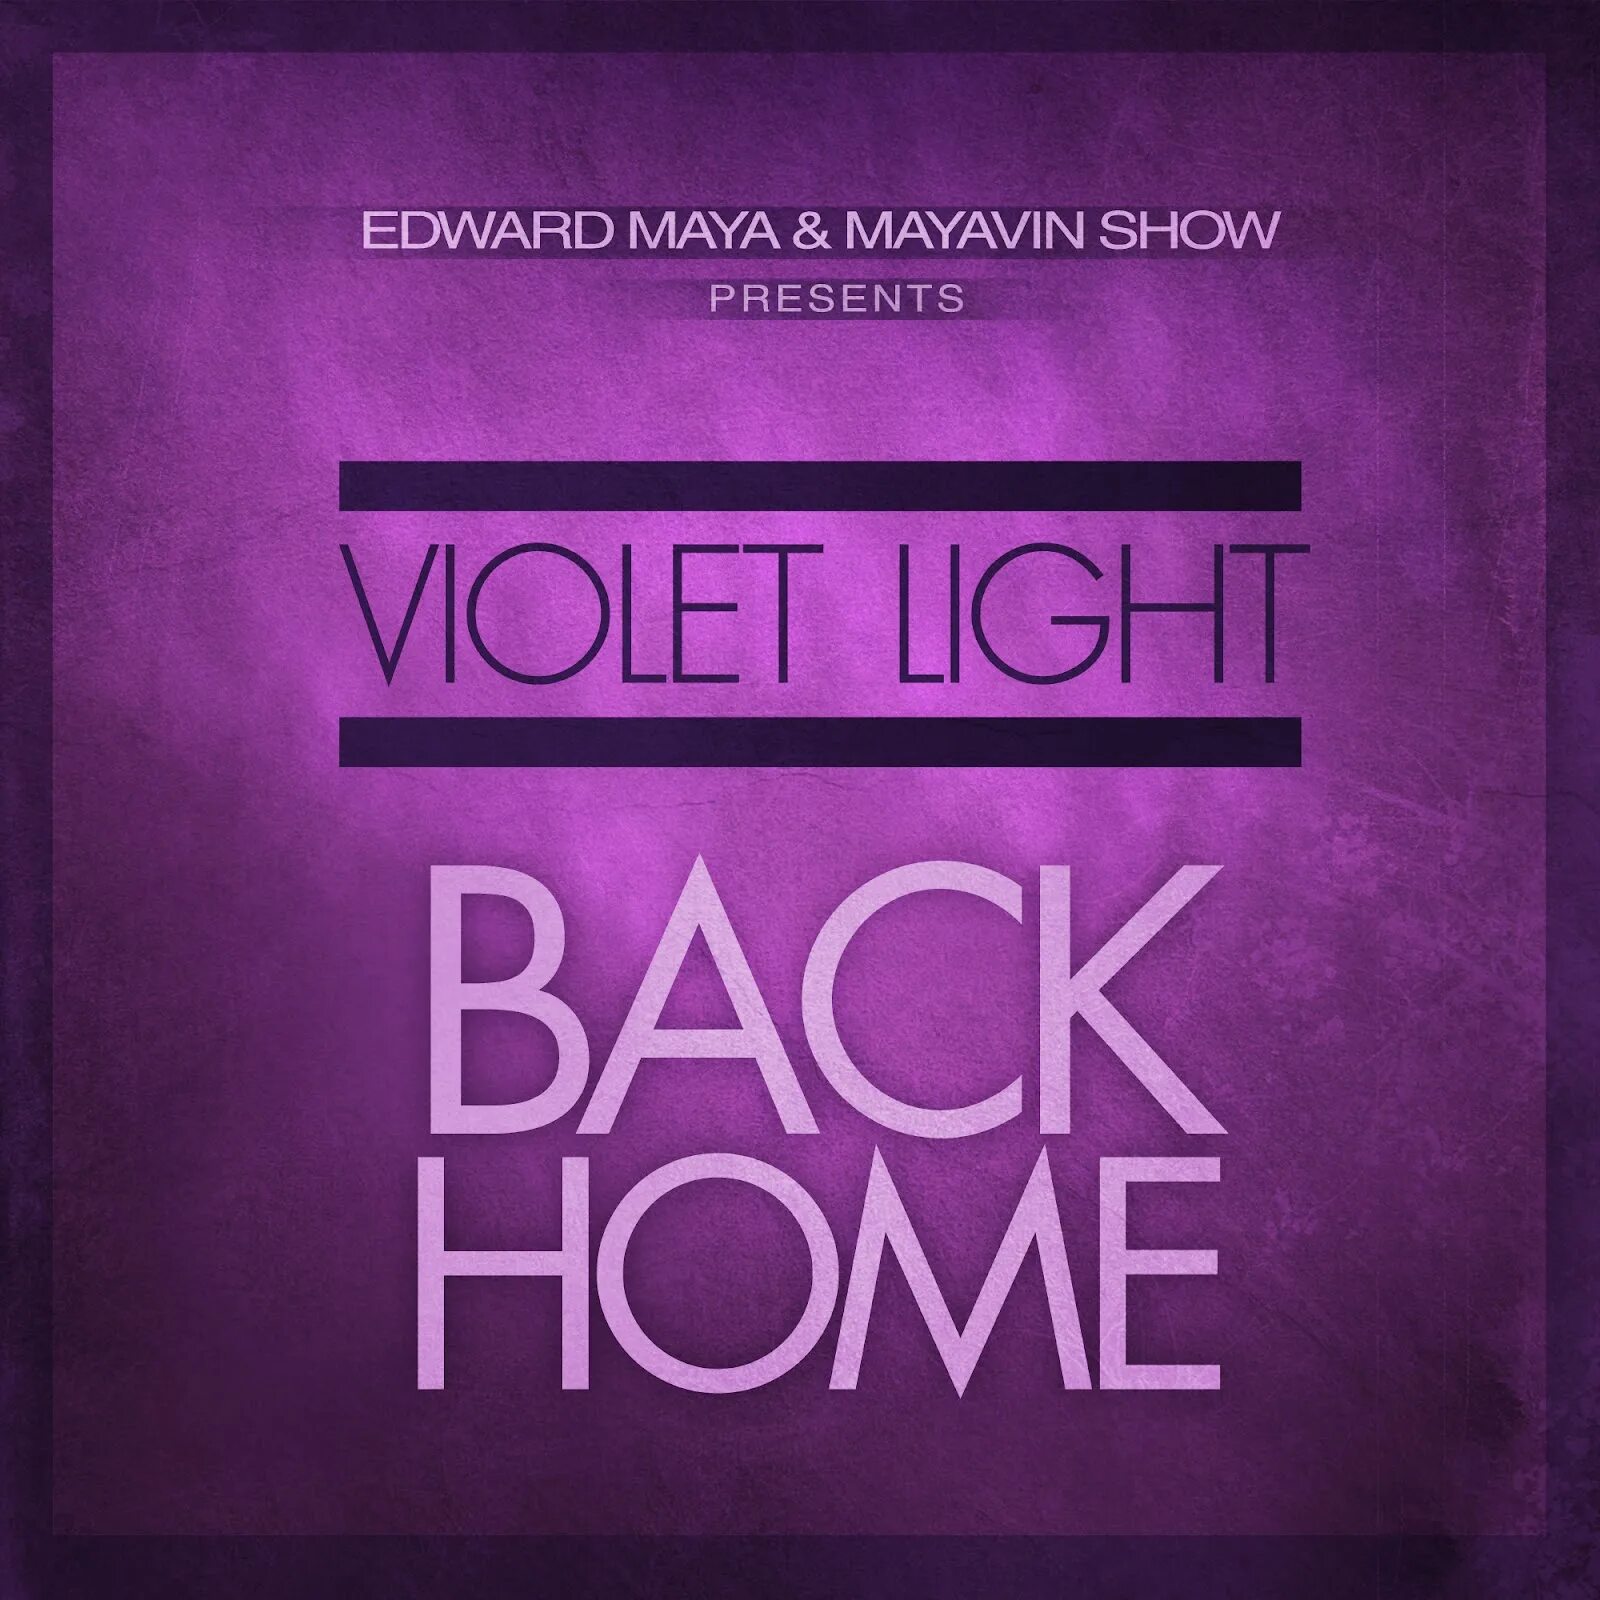 Back Home. Edward Maya Violet Light. Edward Maya back Home. Edward Maya 2022. Edward maya feat